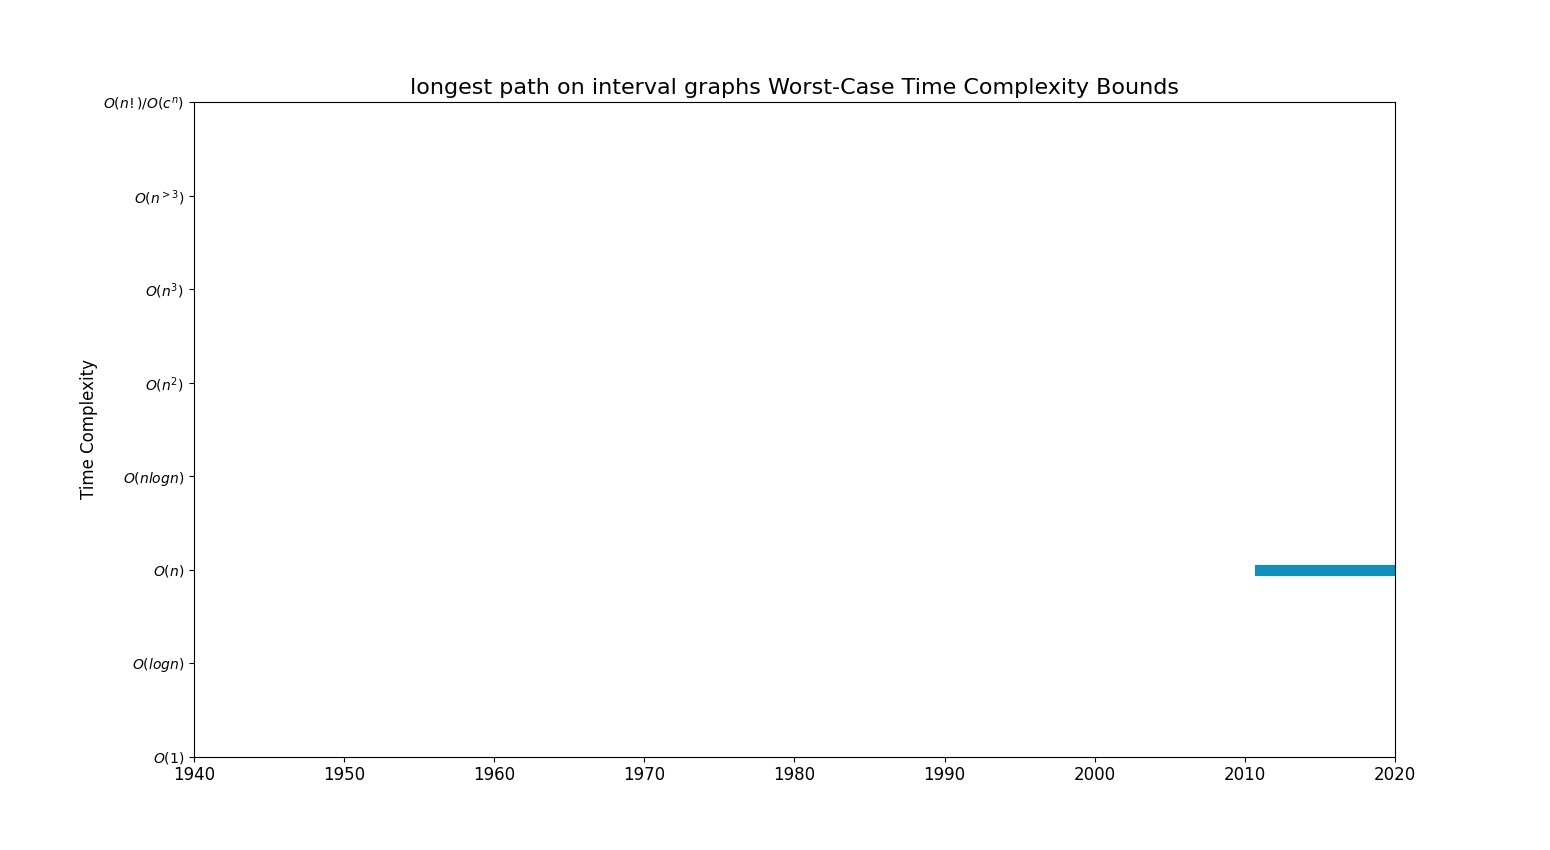 Longest path on interval graphsBoundsChart.png